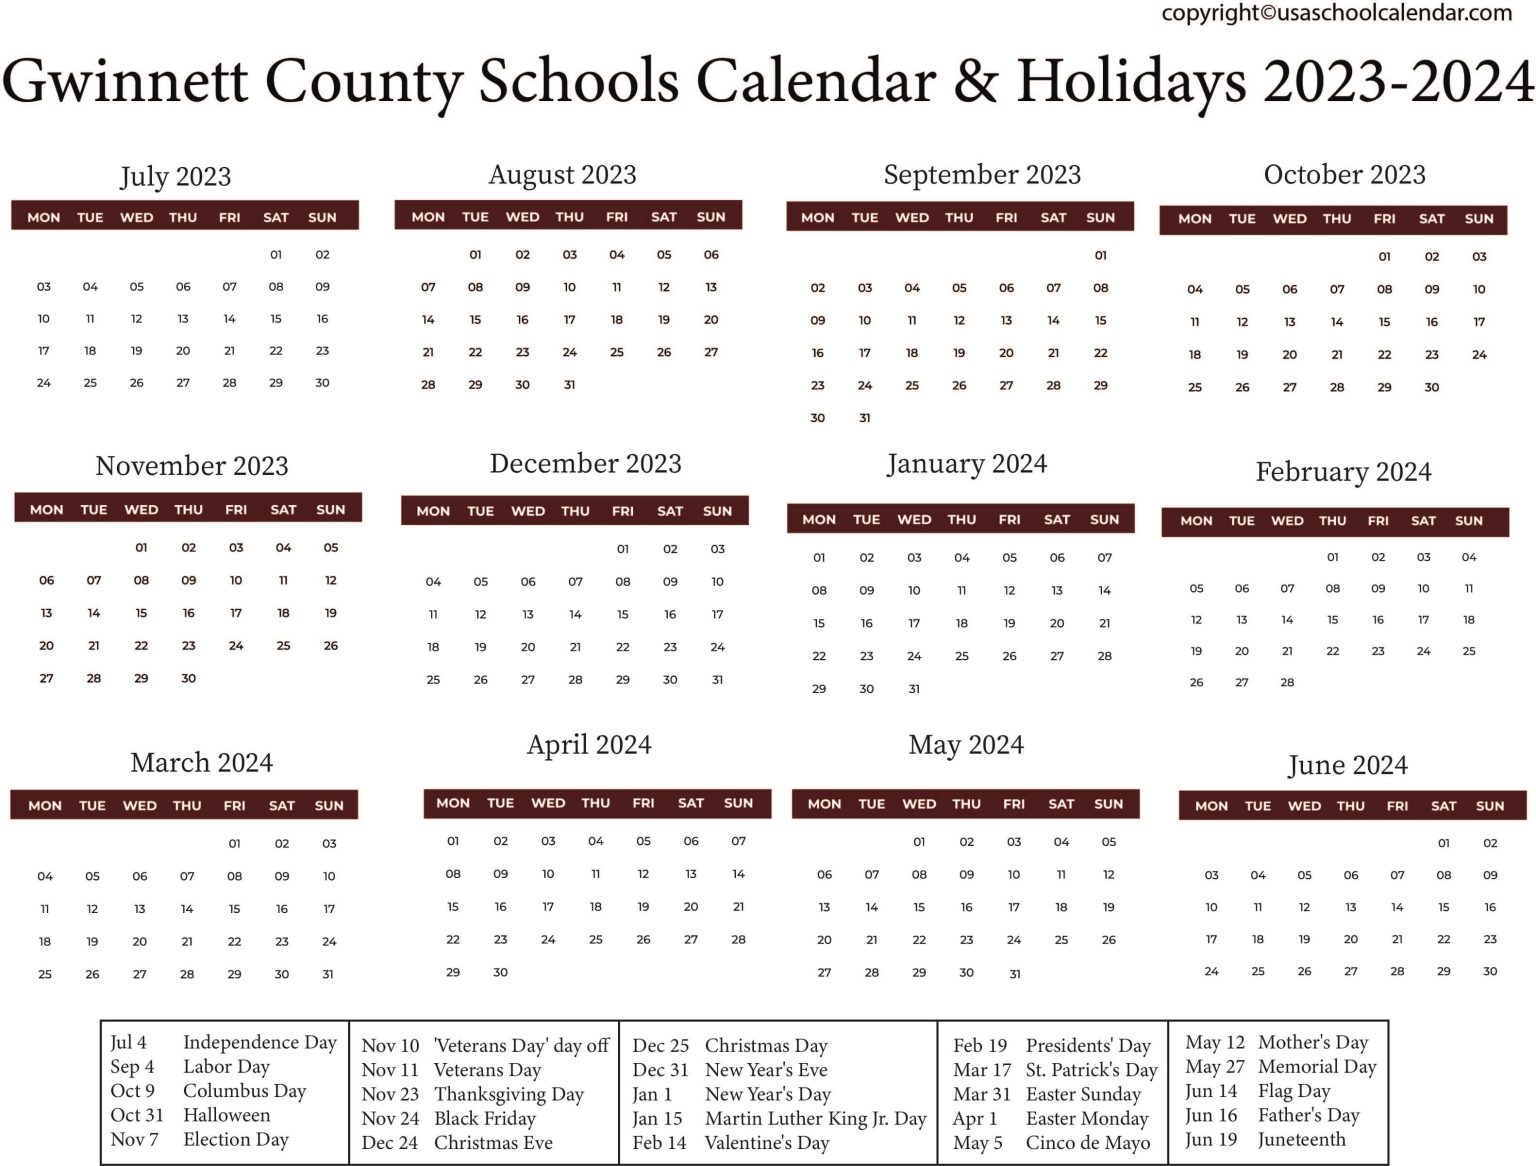 gwinnett-county-schools-calendar-holidays-2023-2024